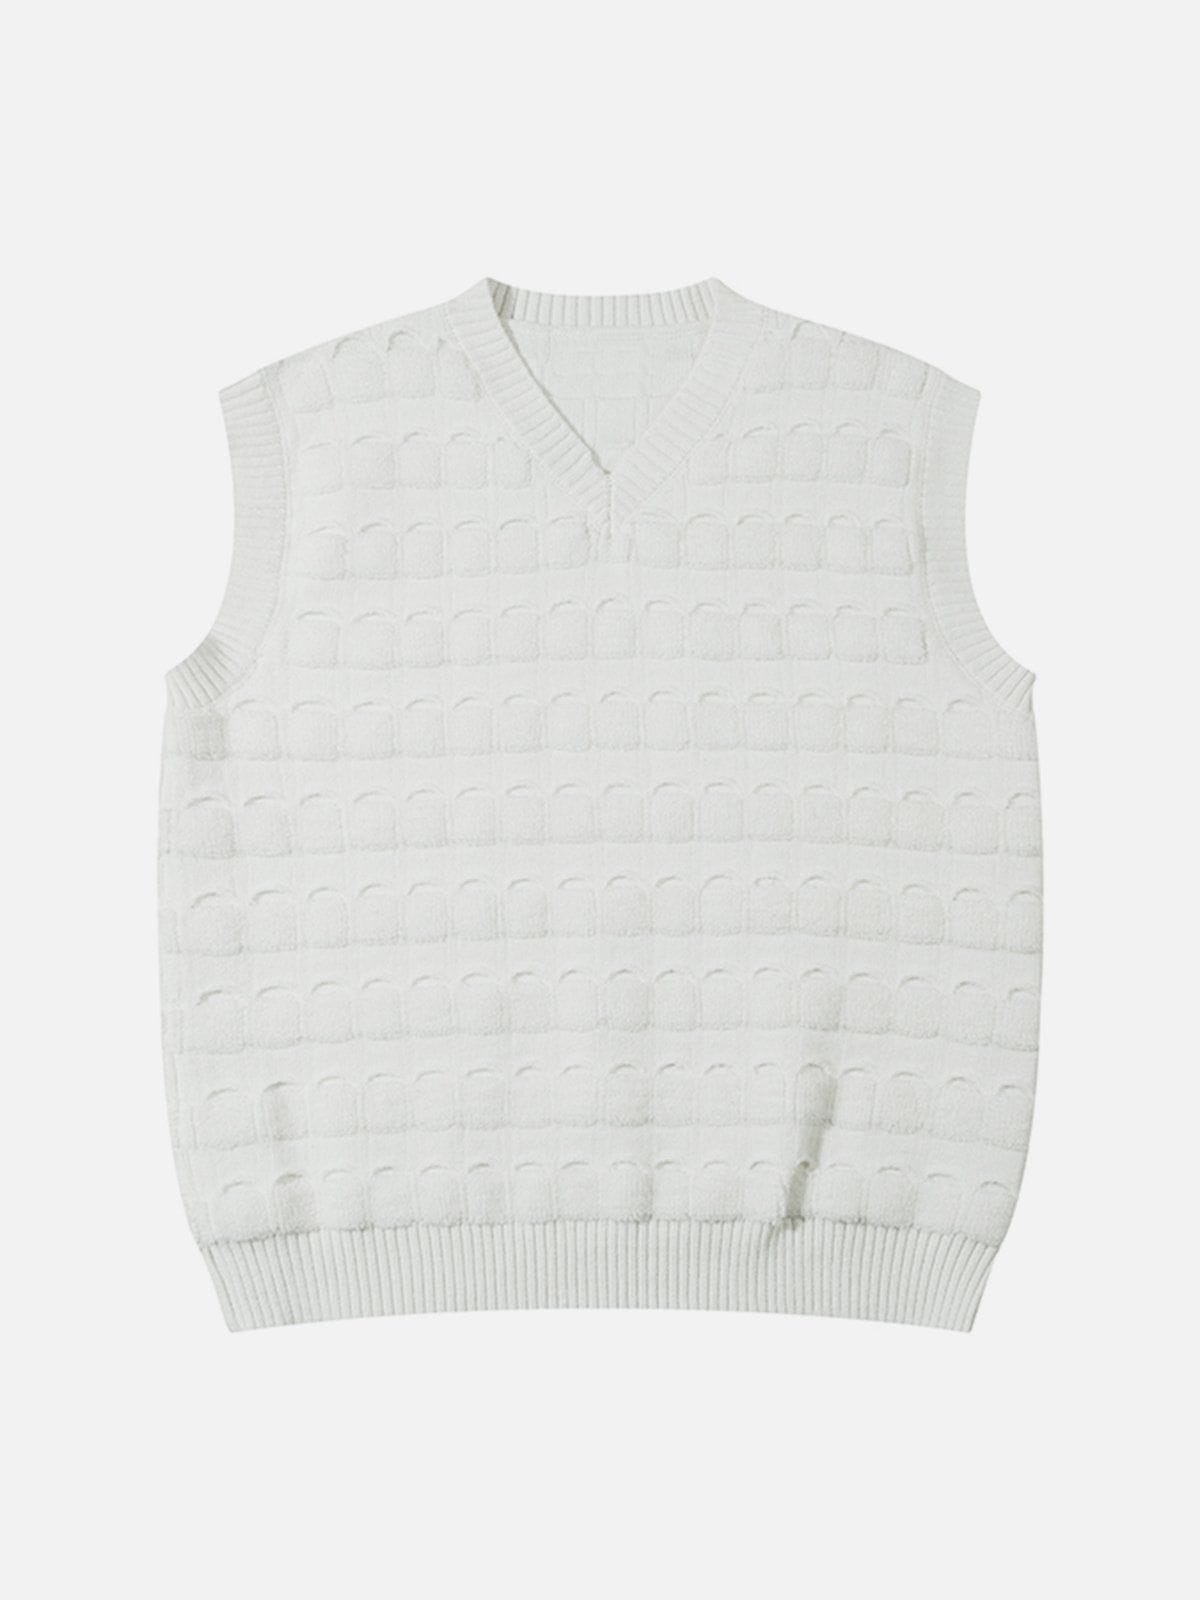 Majesda® - Solid Woven Stripe Sweater Vest outfit ideas streetwear fashion